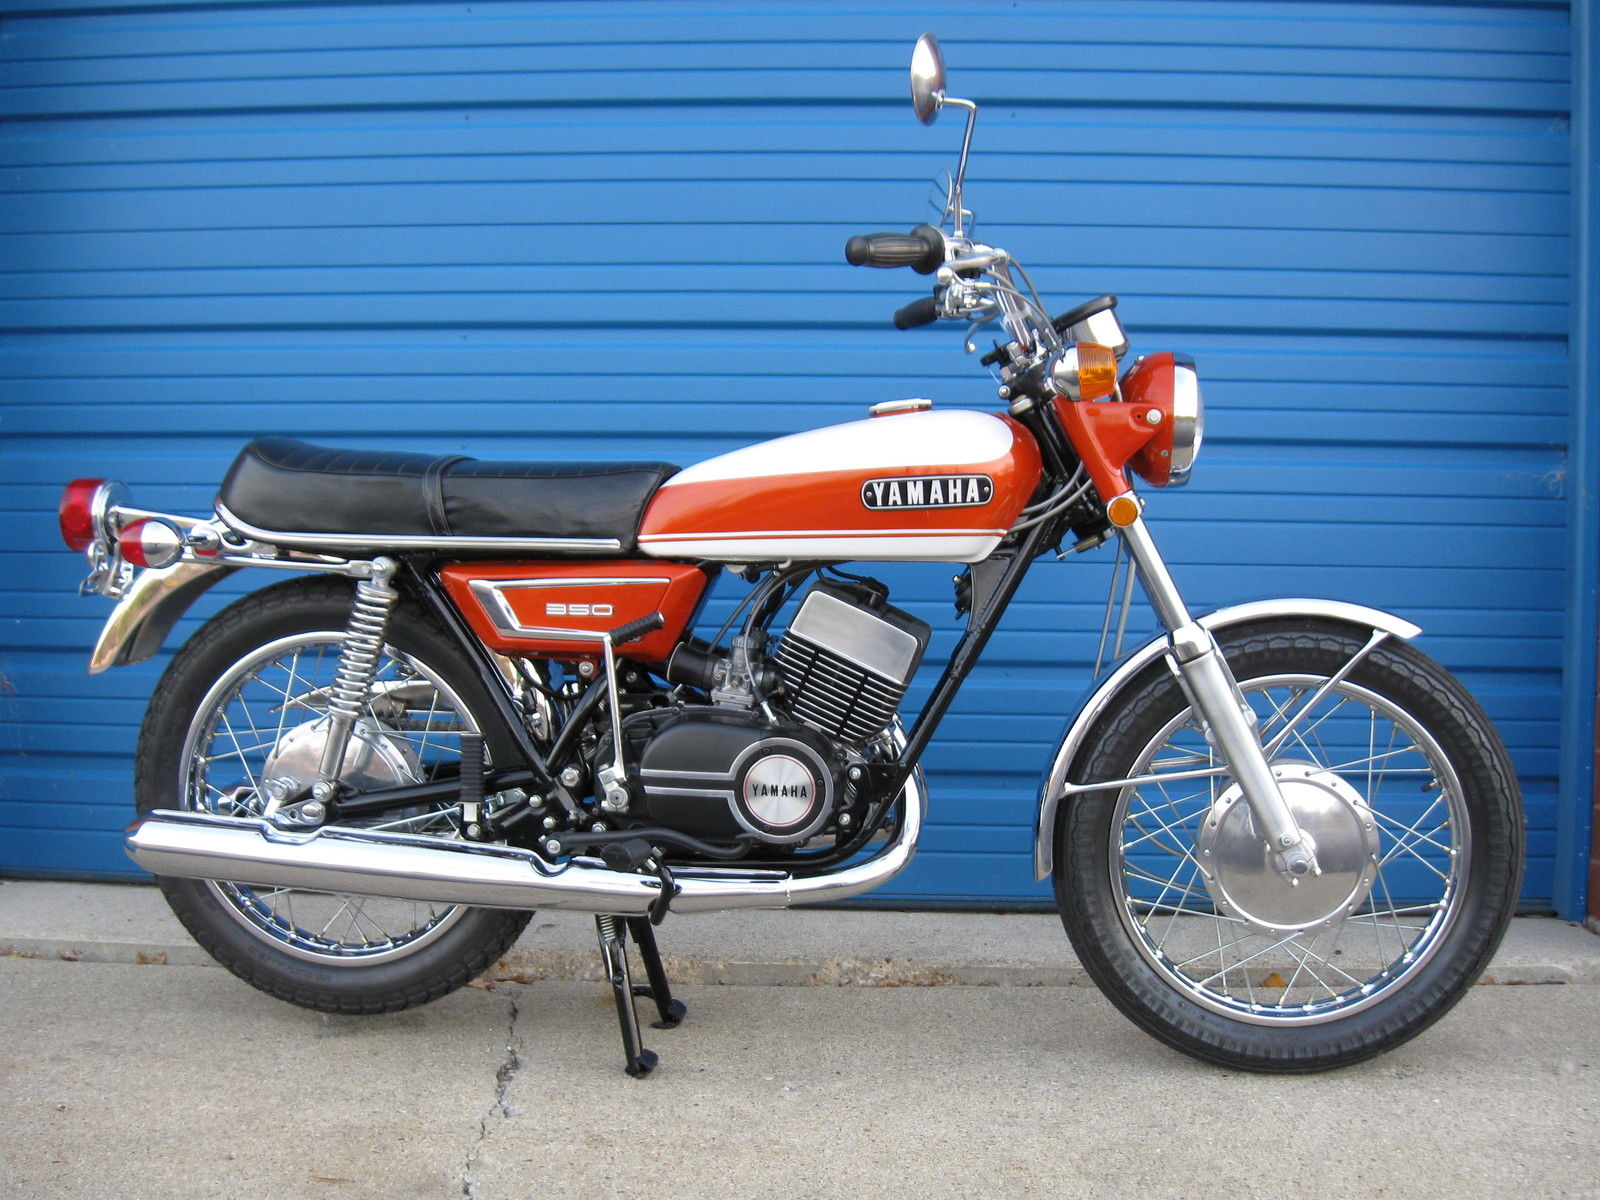 Restored Yamaha R5 350 - 1971 Photographs at Classic Bikes ...
